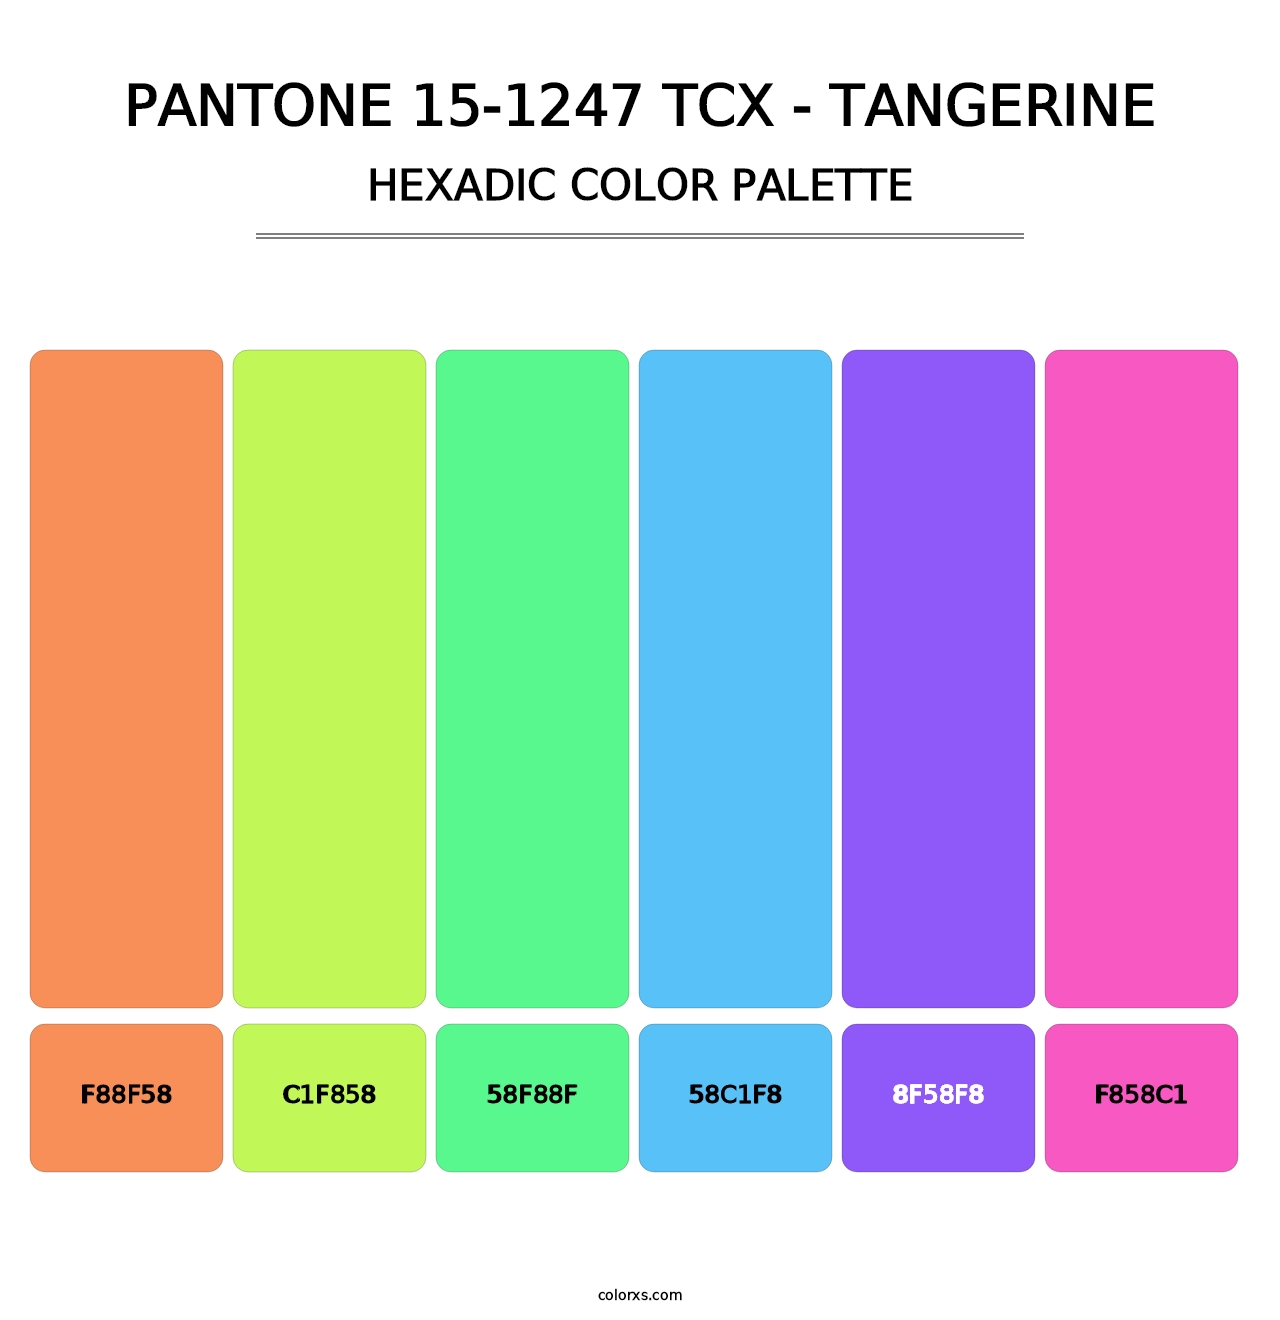 PANTONE 15-1247 TCX - Tangerine - Hexadic Color Palette